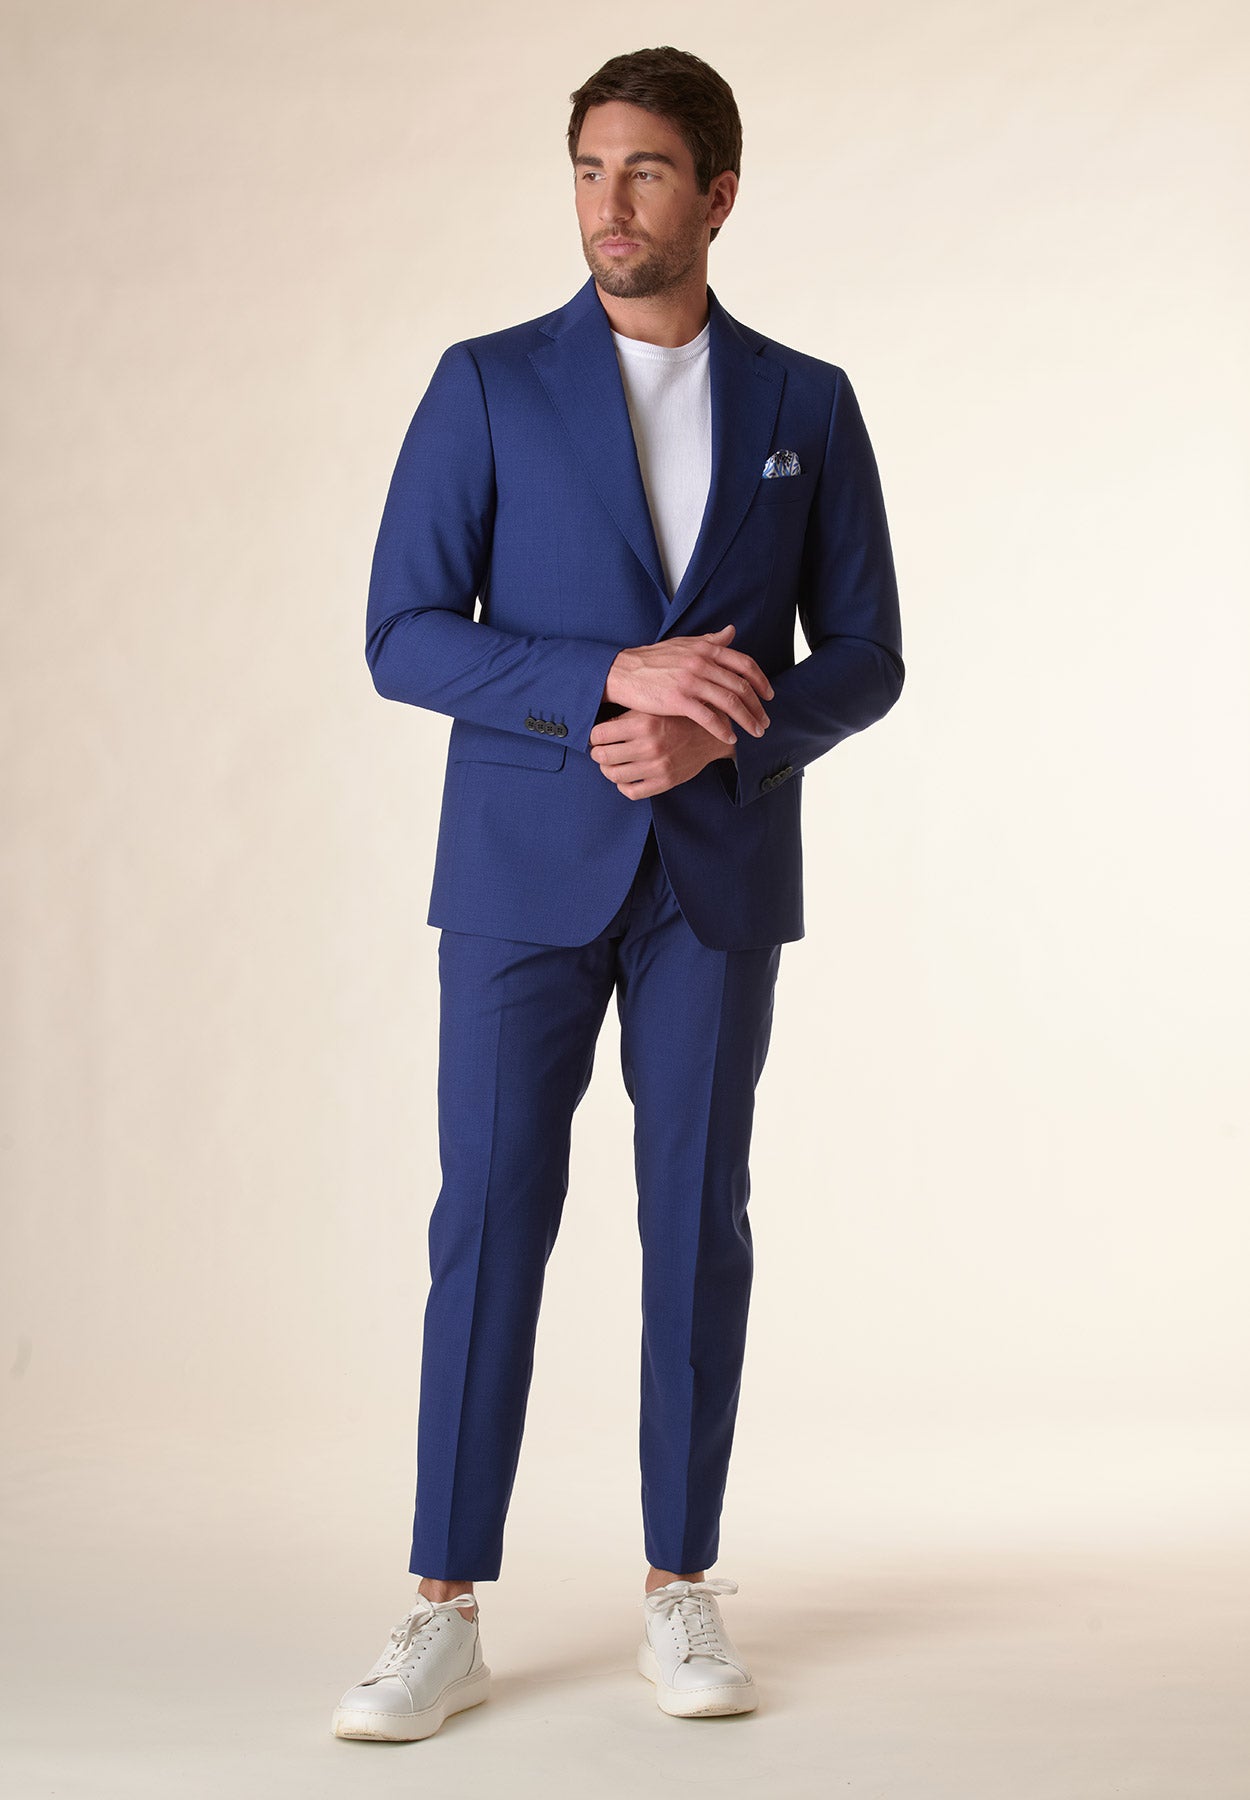 Bluette microstructured wool custom fit suit